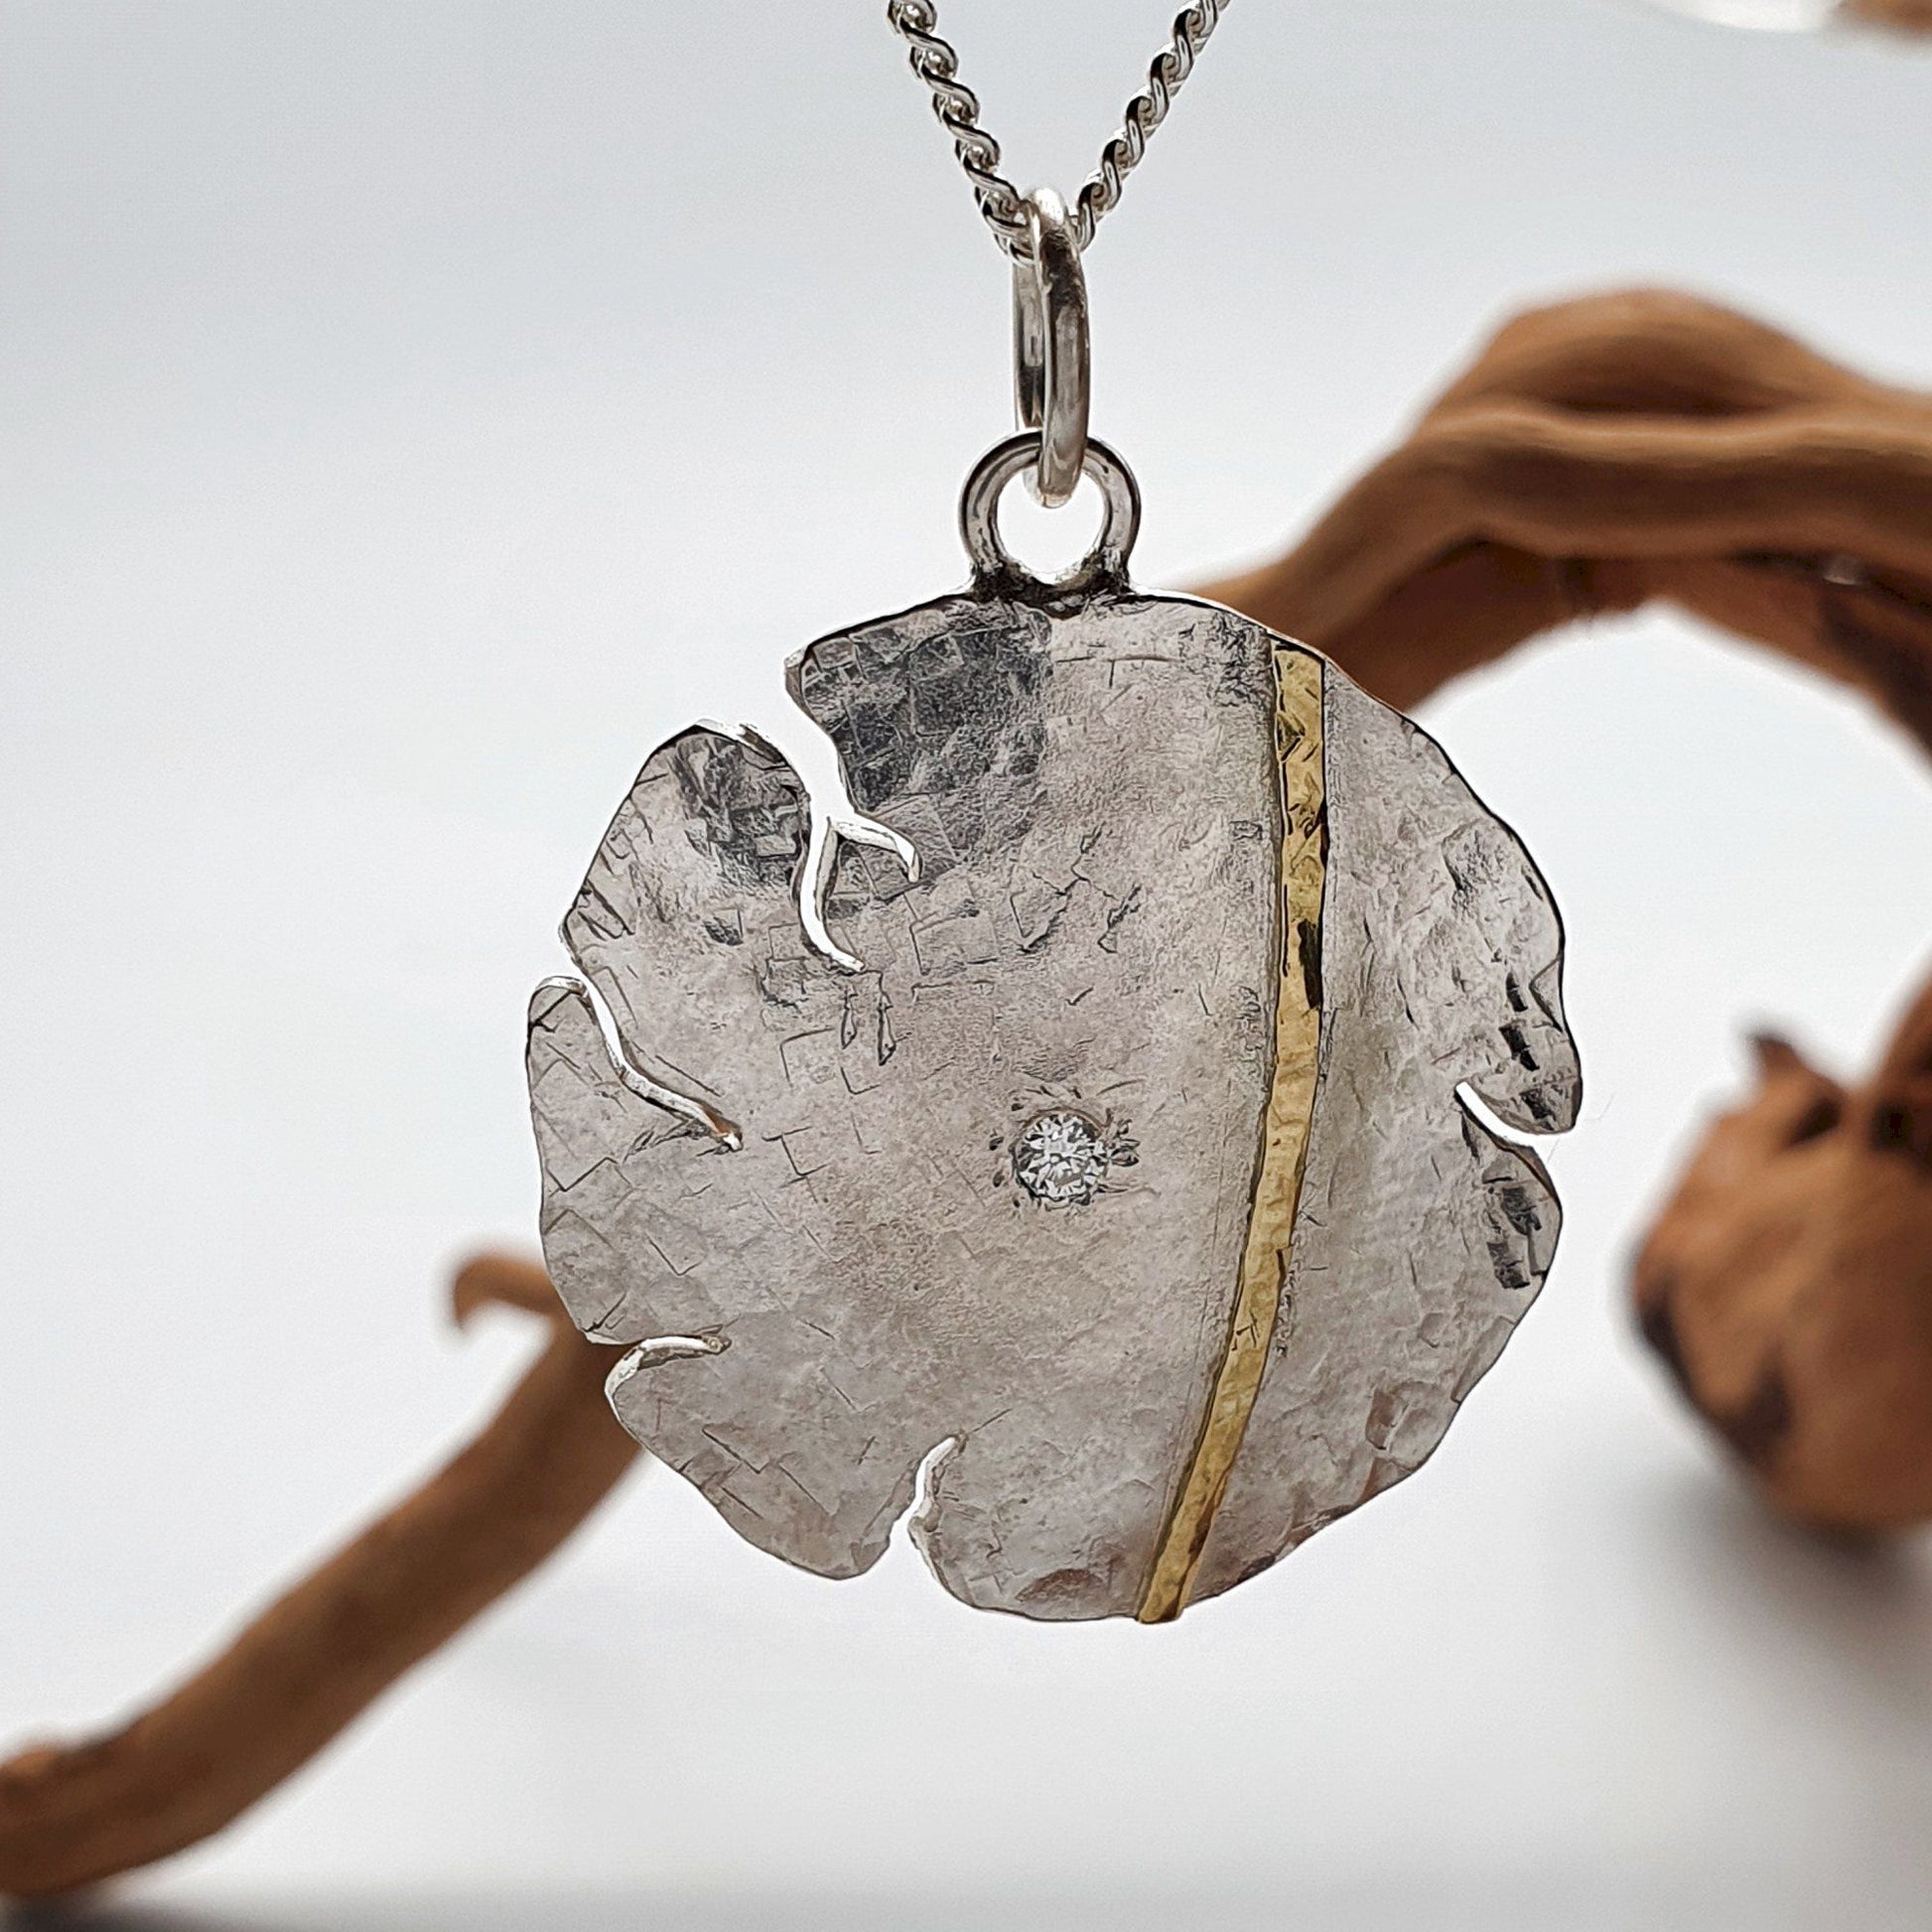 Diamond set silver and gold pendant, Fracture design - Cumbrian Designs